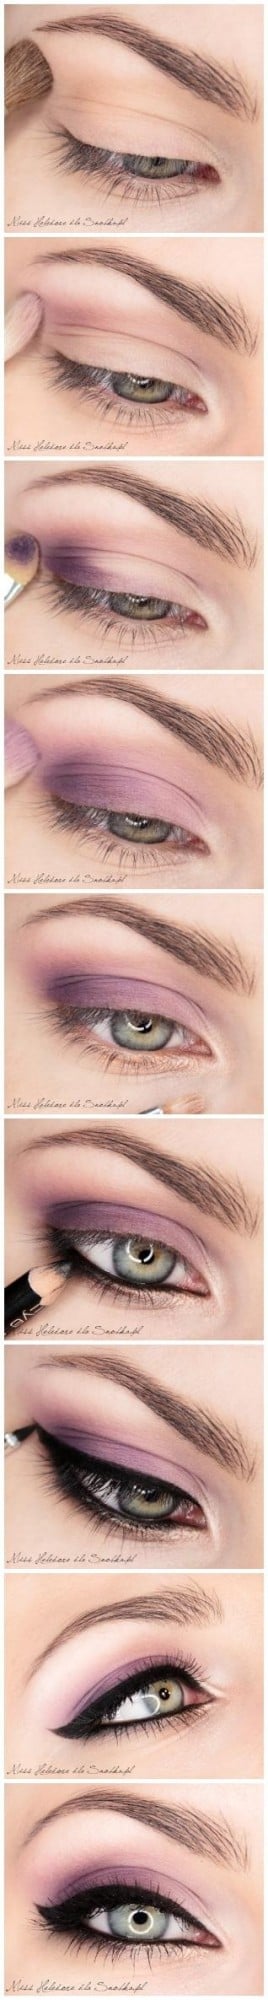 23 Gorgeous Eye-Makeup Tutorials (1)